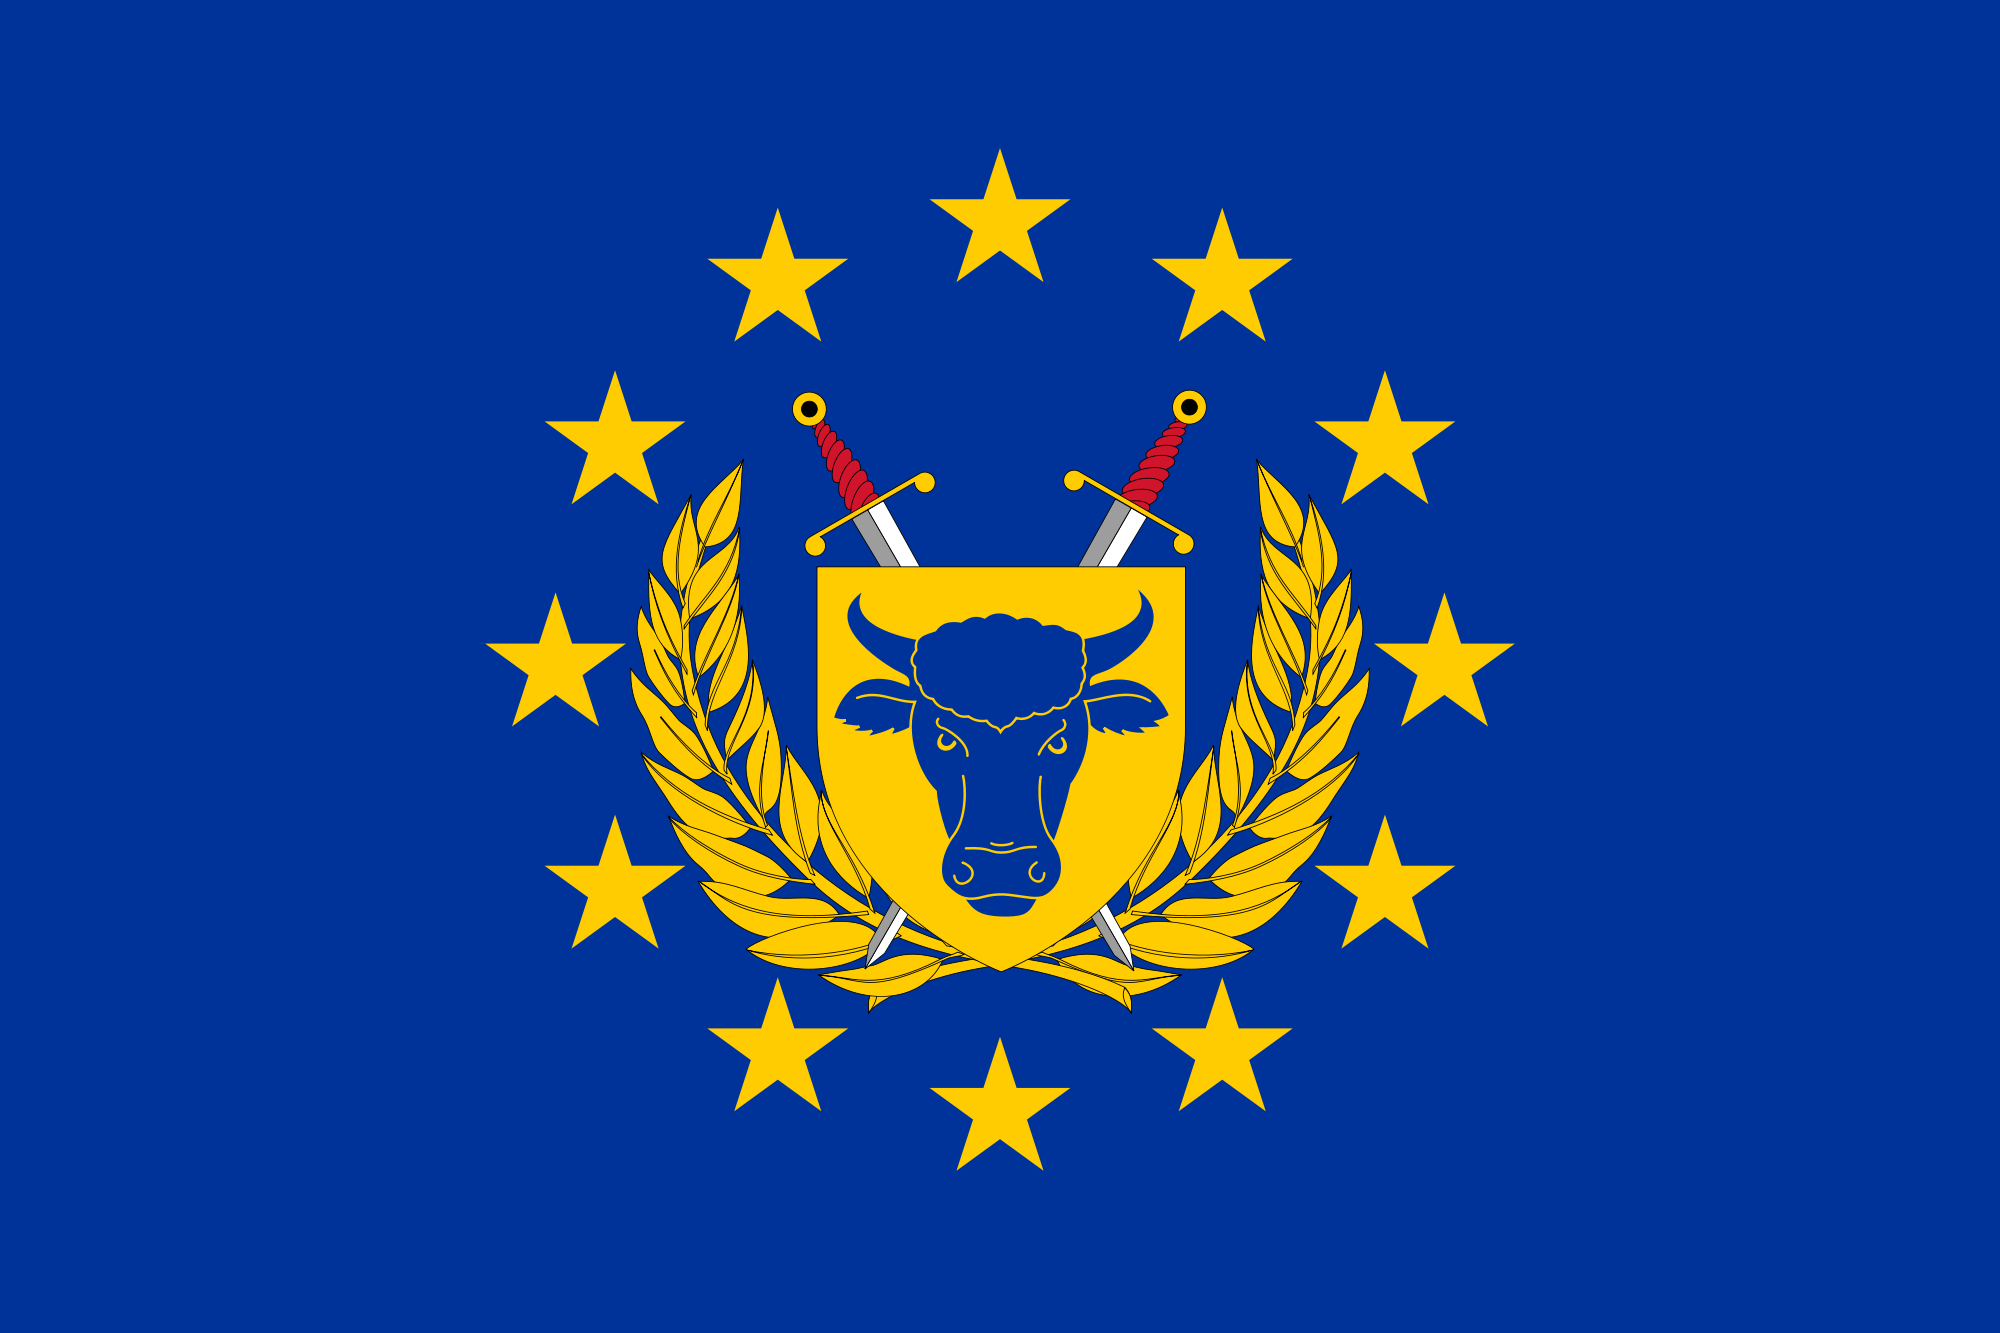 <i>European Army Flag, Image Source: <a href='https://www.google.com/url?sa=i&source=images&cd=&cad=rja&uact=8&ved=2ahUKEwjKzvXrkevfAhVJHqwKHZ8TCAcQjhx6BAgBEAM&url=https%3A%2F%2Fcommons.wikimedia.org%2Fwiki%2FFile%3AEuropean_Army_Flag.svg&psig=AOvVaw1IoscJR_GgXljAbtR7iItk&ust=1547482003572039'>Wikimedia Commons</a></i>